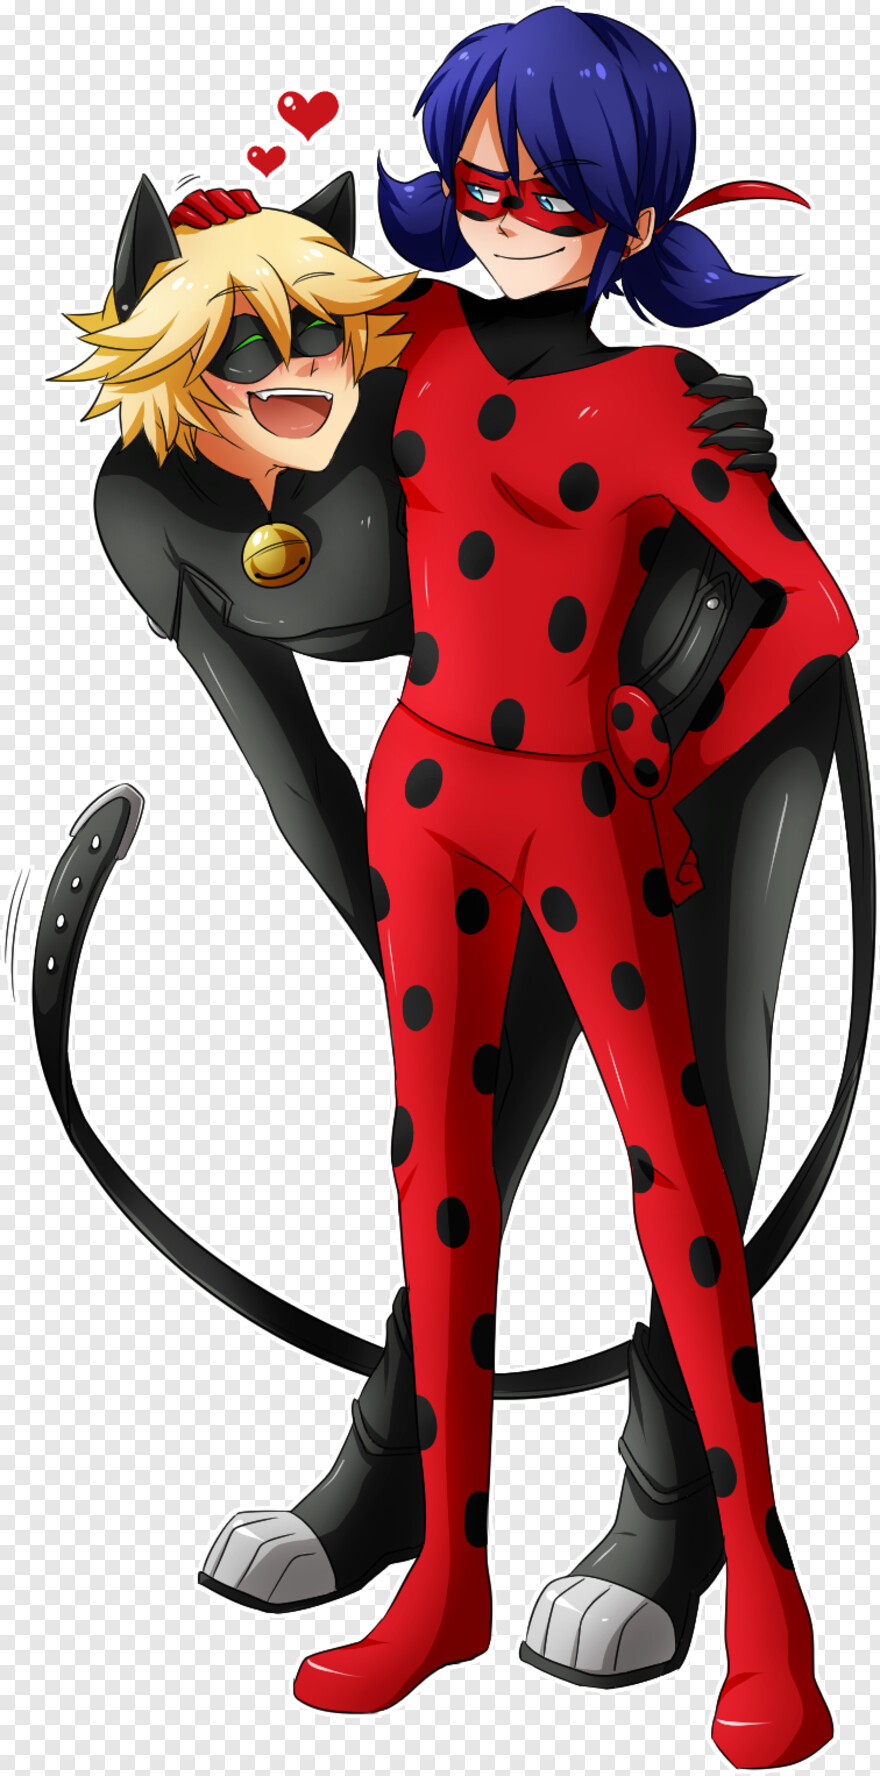 Roblox Character Free Icon Library - roblox gfx ladybug